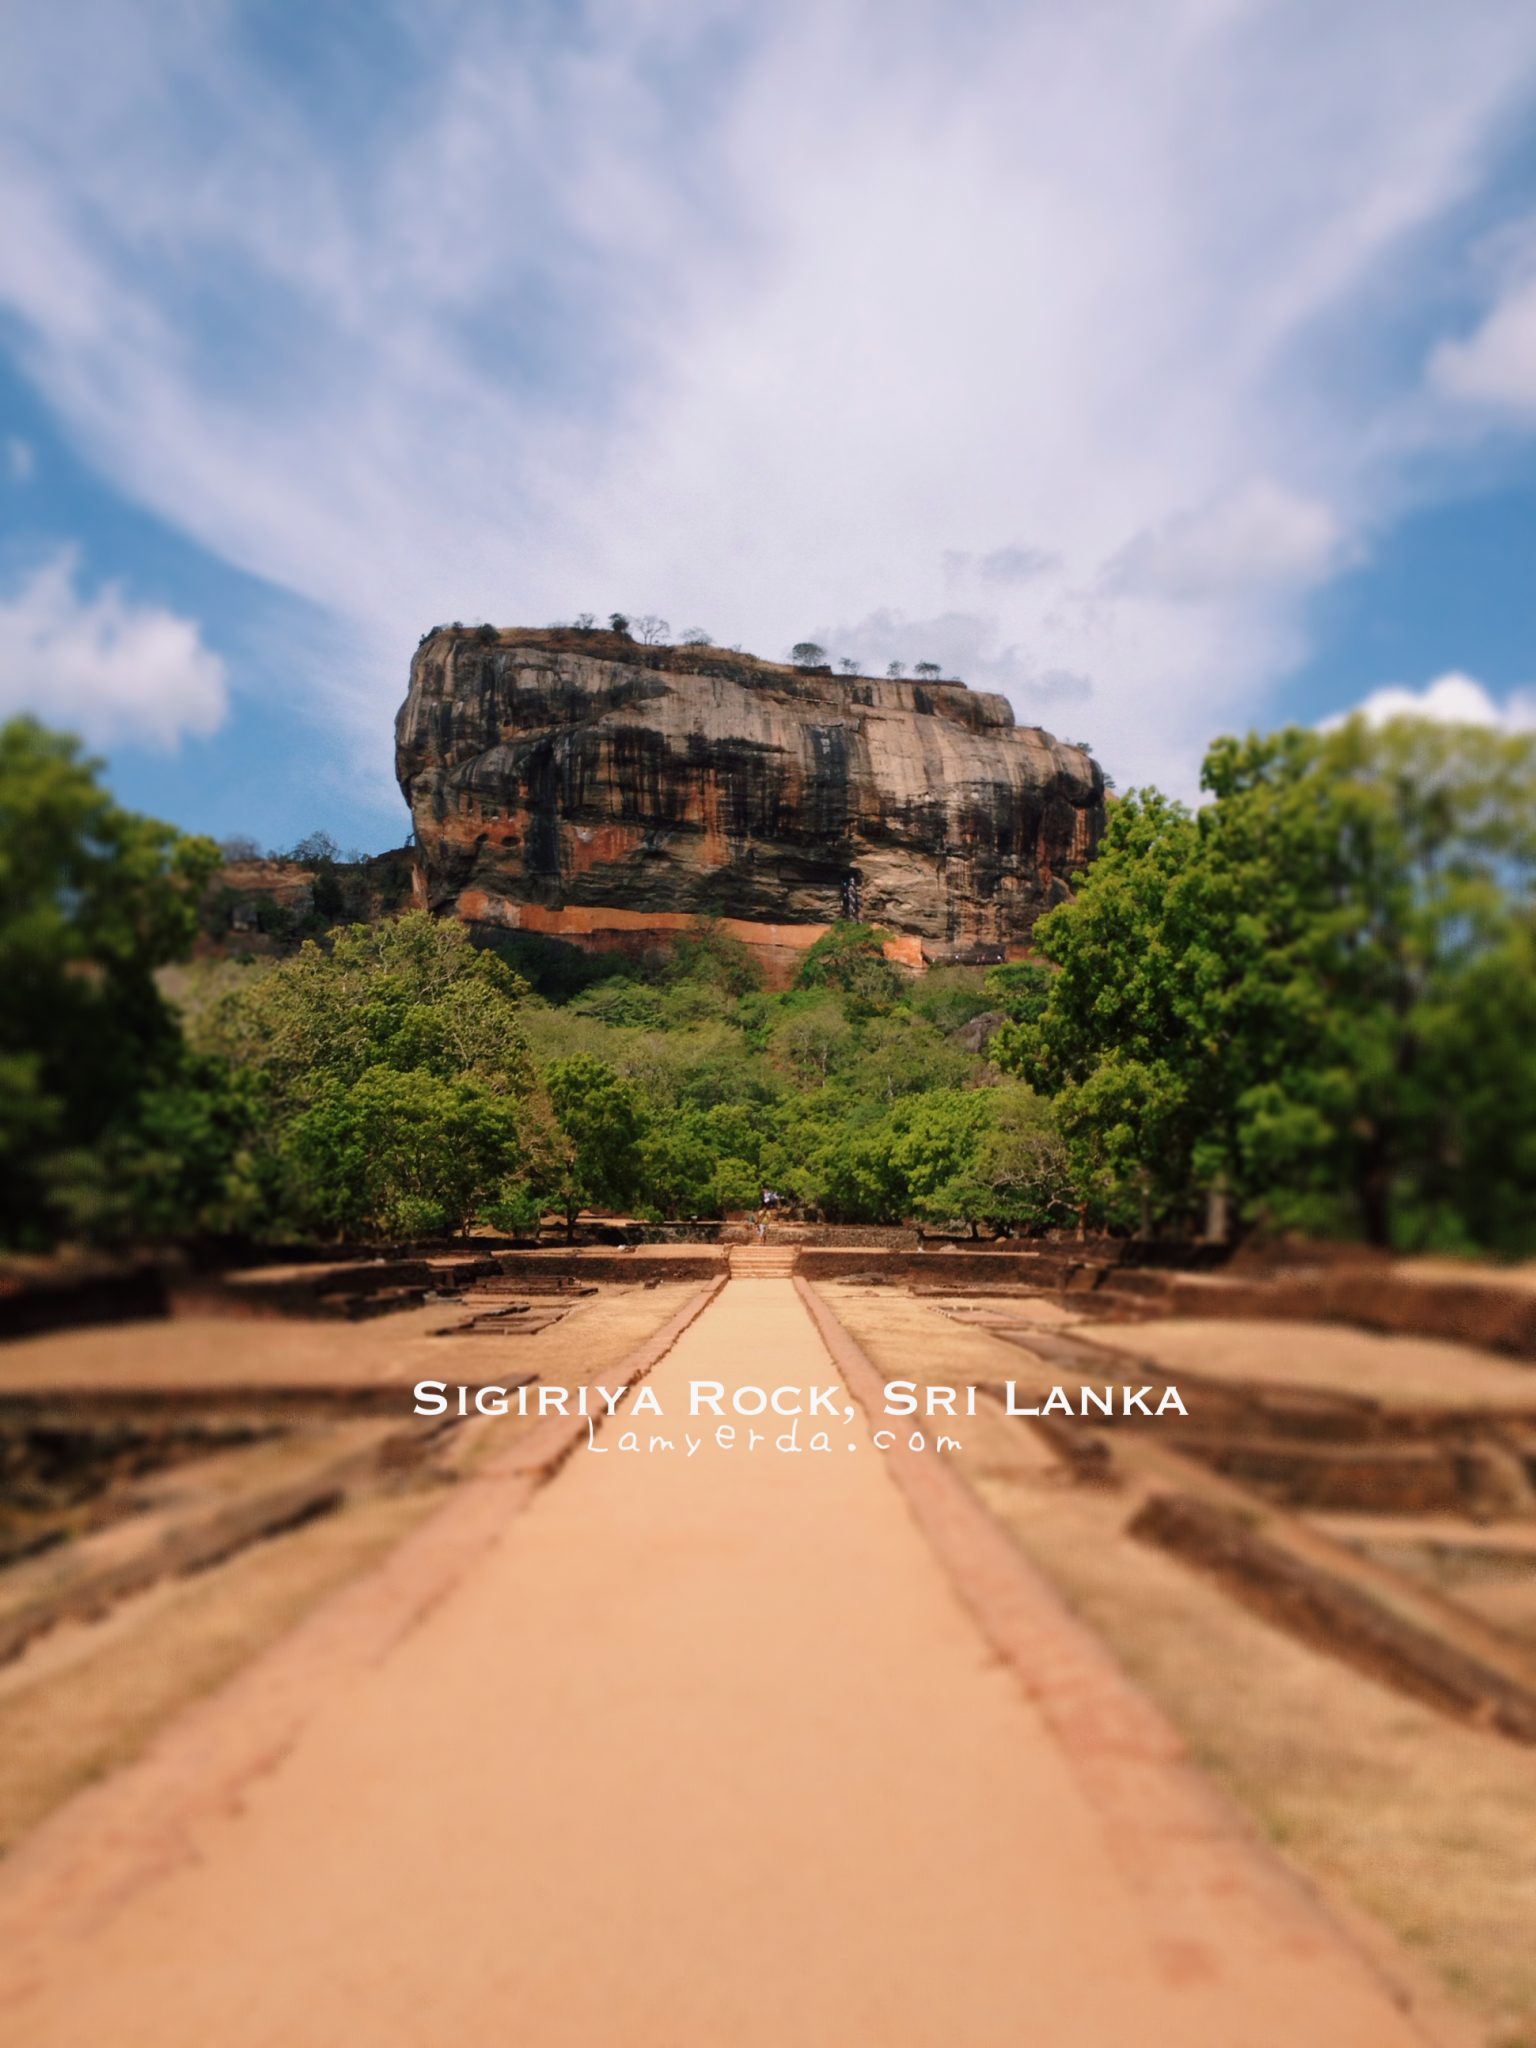 Sigiriya Lion's Rock: Fortress in the Sky - Lamyerda